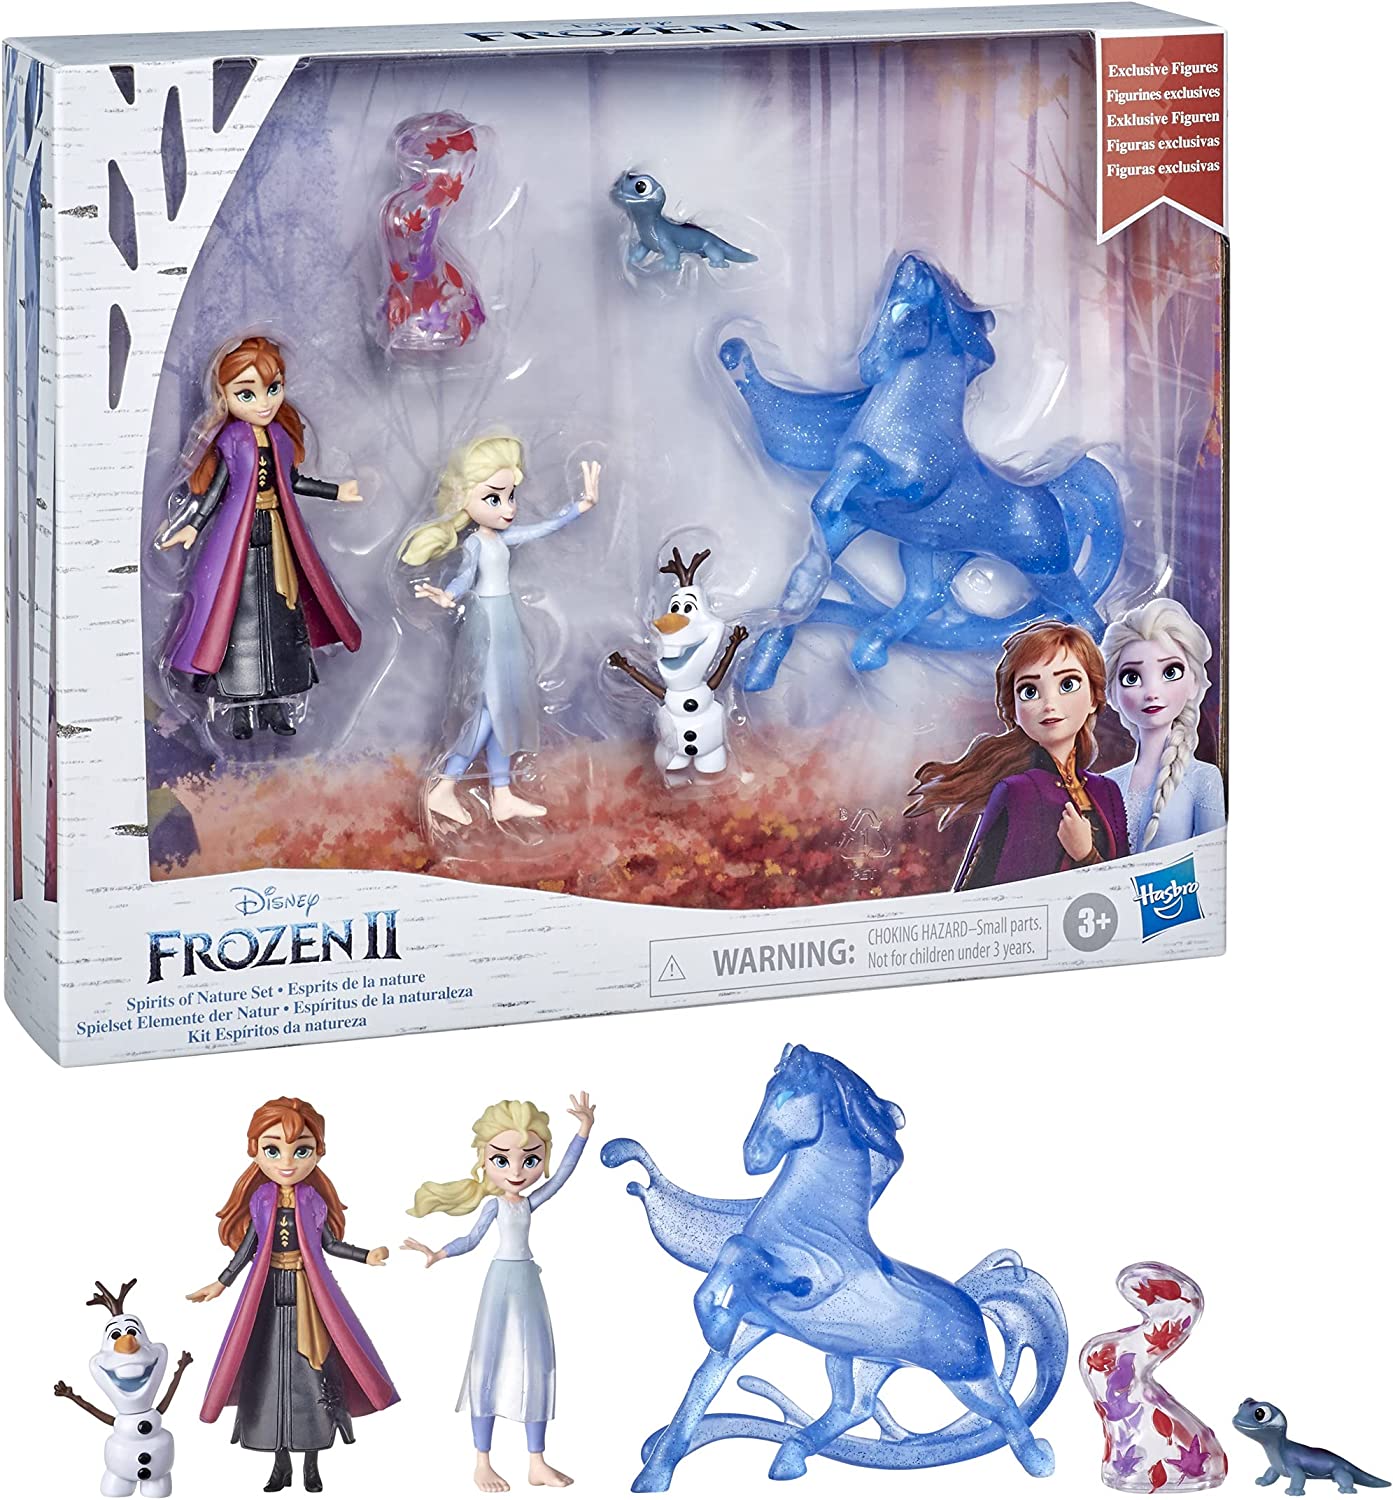 Disney's Frozen 2 Spirits of Nature Set Includes 5 Dolls - Elsa, Anna, Olaf, Bruni the Fire, Spirit doll